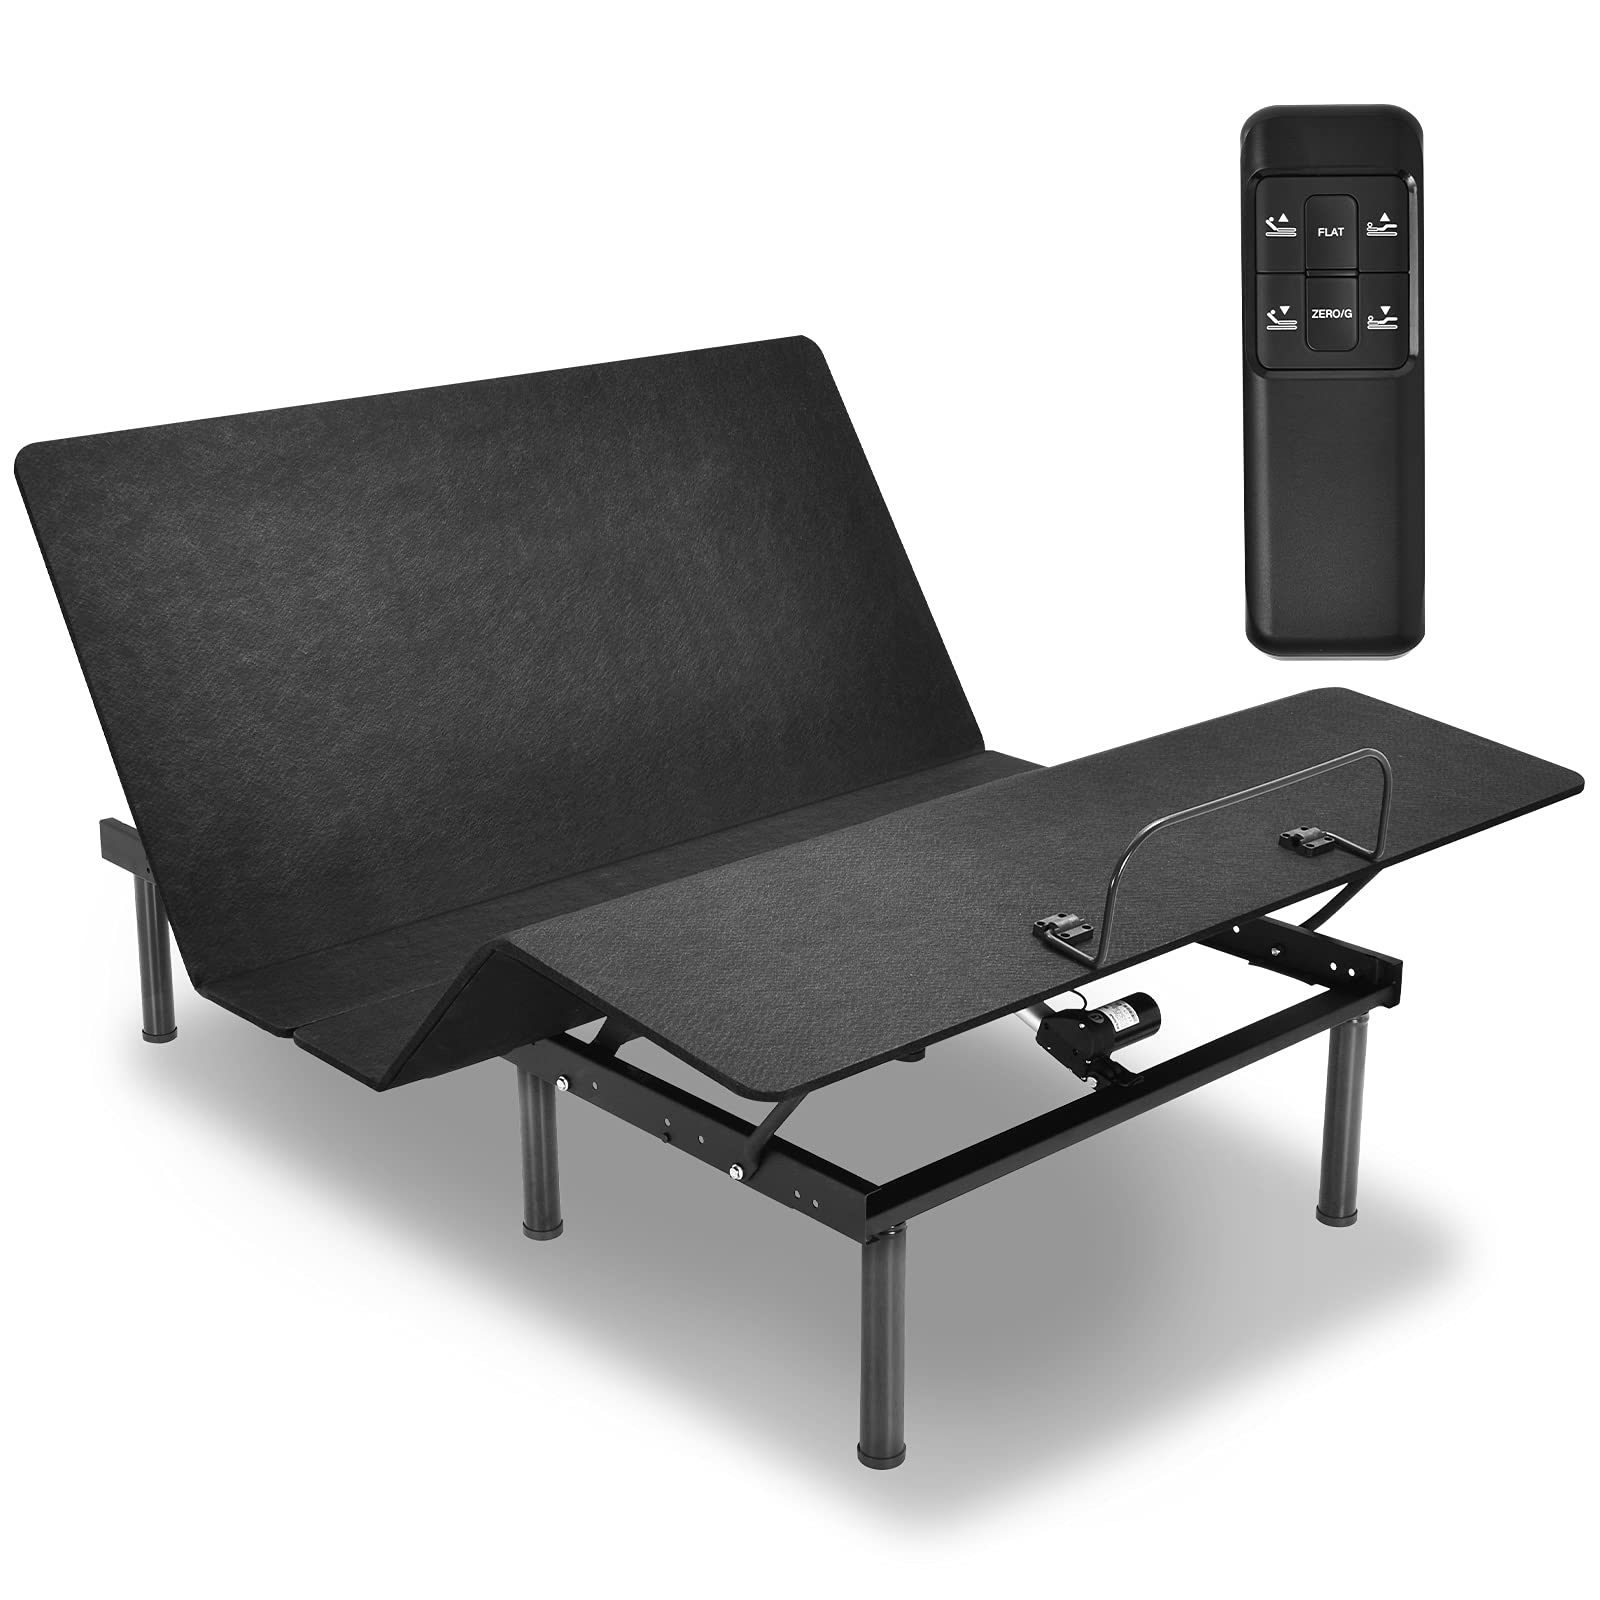 Giantex Adjustable Bed Base, Electric Adjustable Bed Frame w/ Wireless Remote